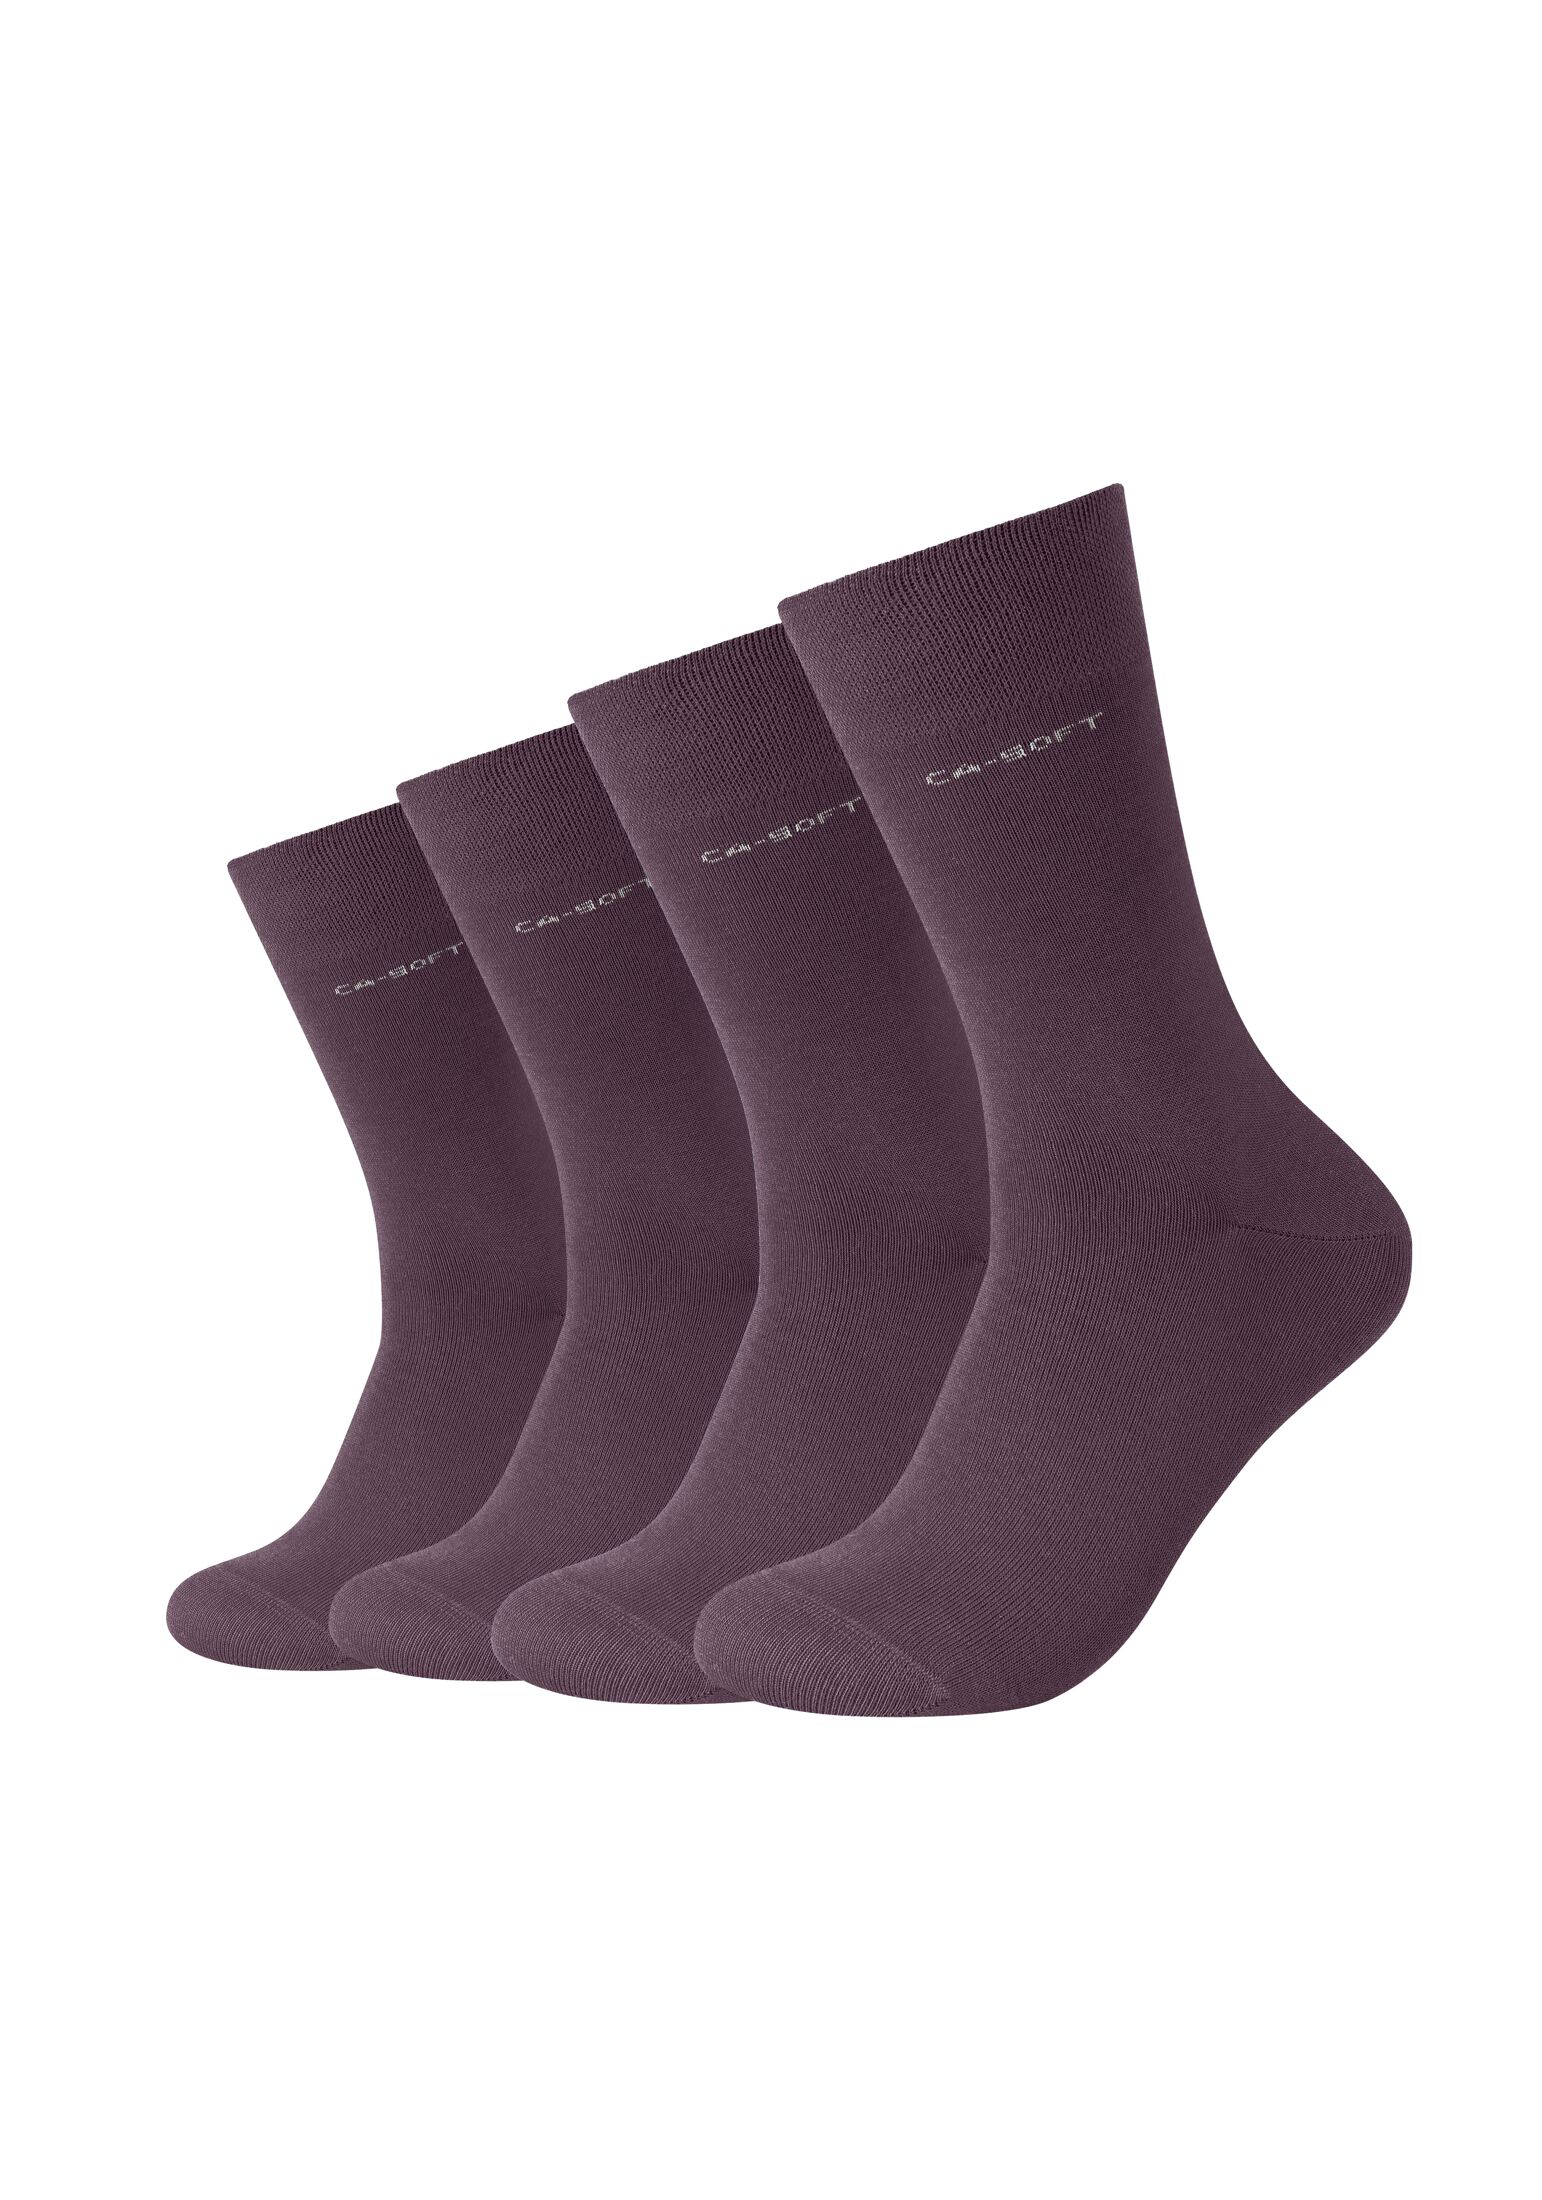 Носки camano verstärktem Fersen und Zehenbereich 4 шт ca soft, цвет potent purple